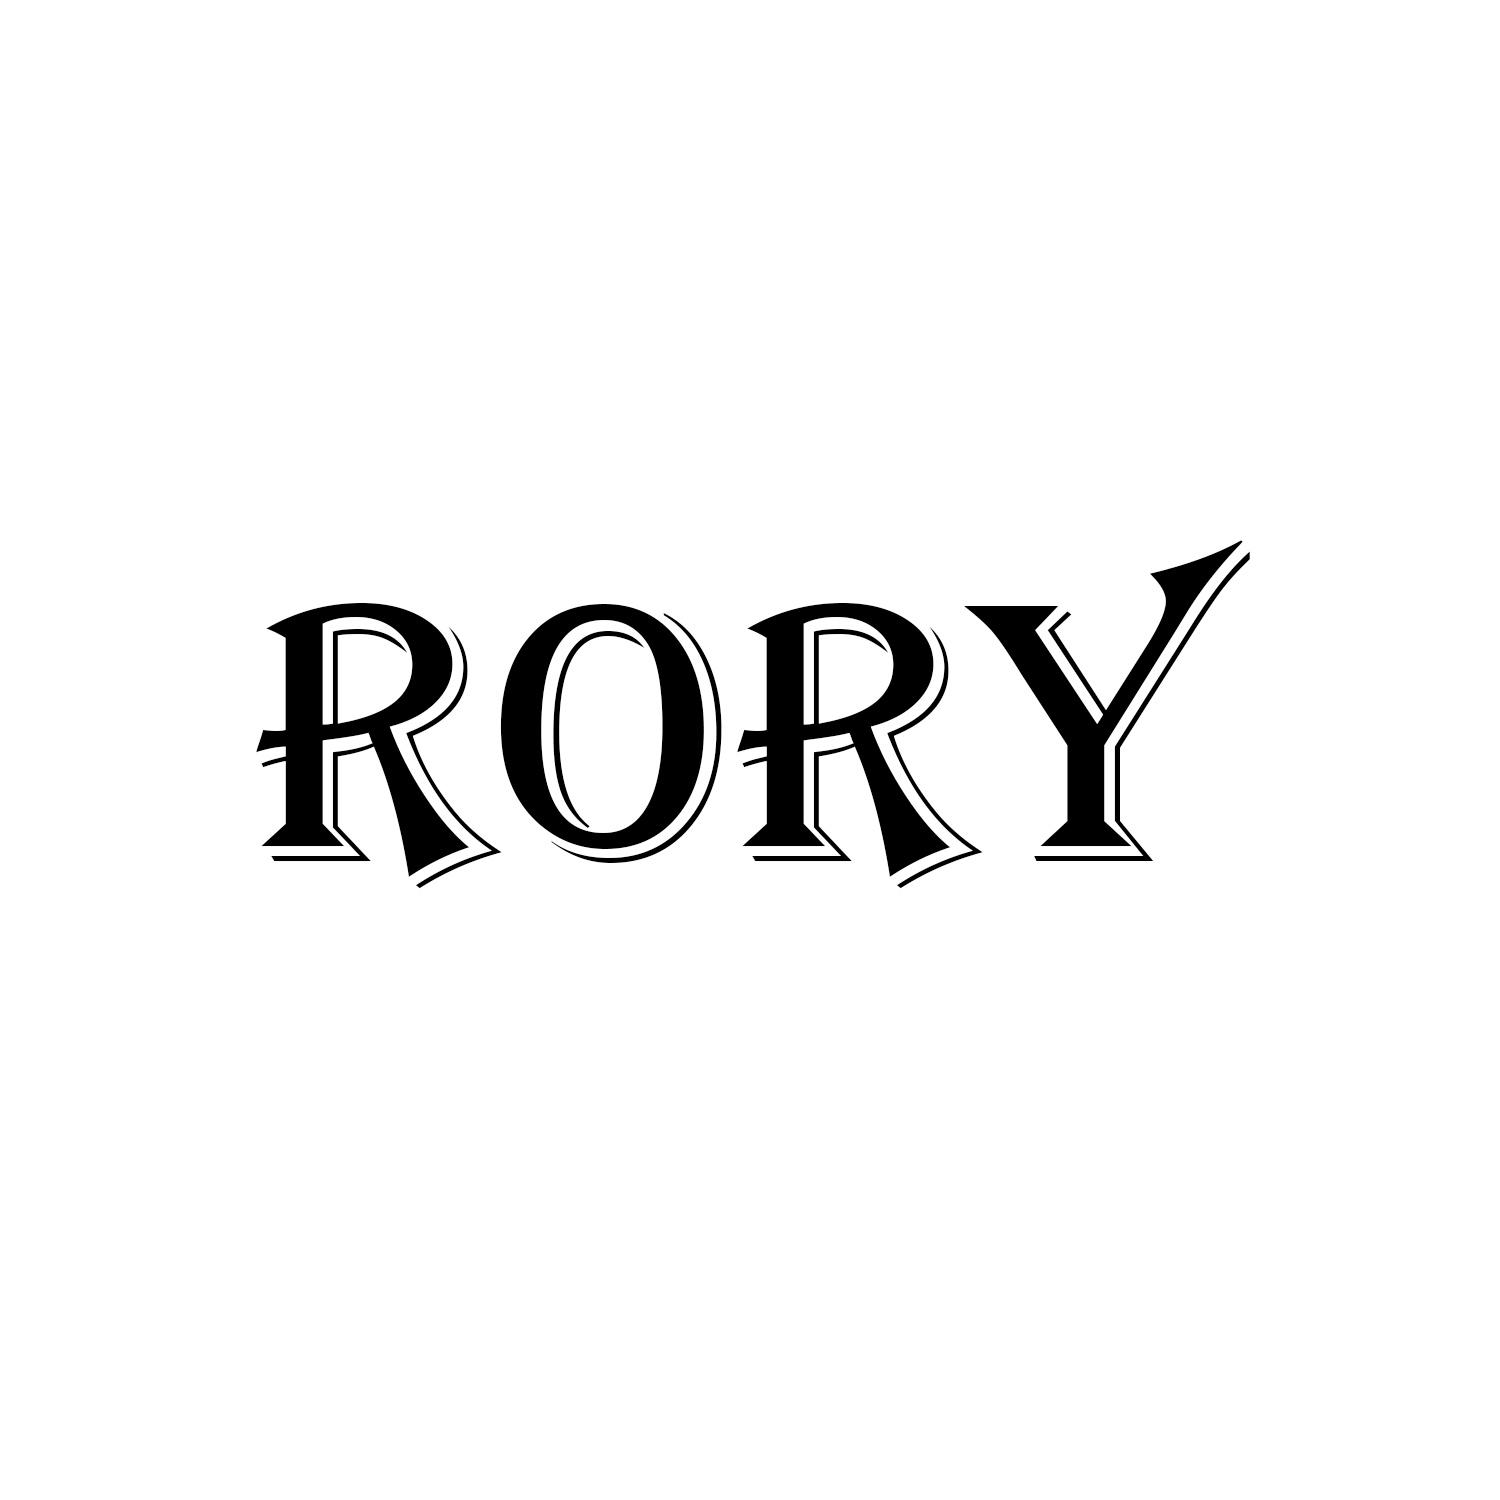 RORY